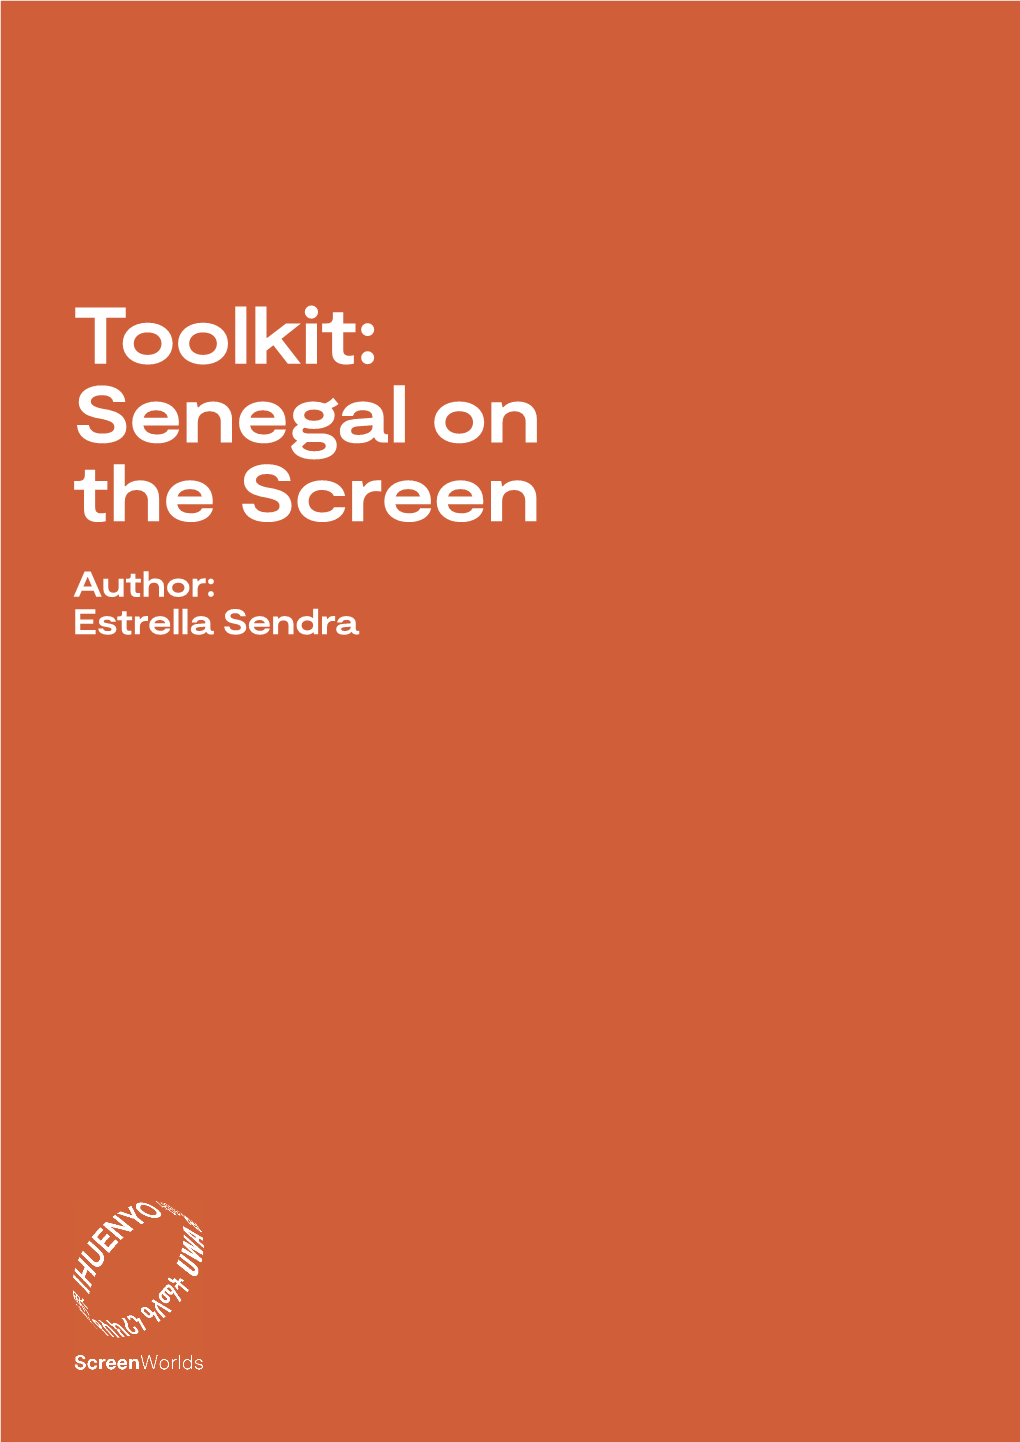 Senegal on the Screen Author: Estrella Sendra Toolkit: Senegal on the Screen 2 by Estrella Sendra